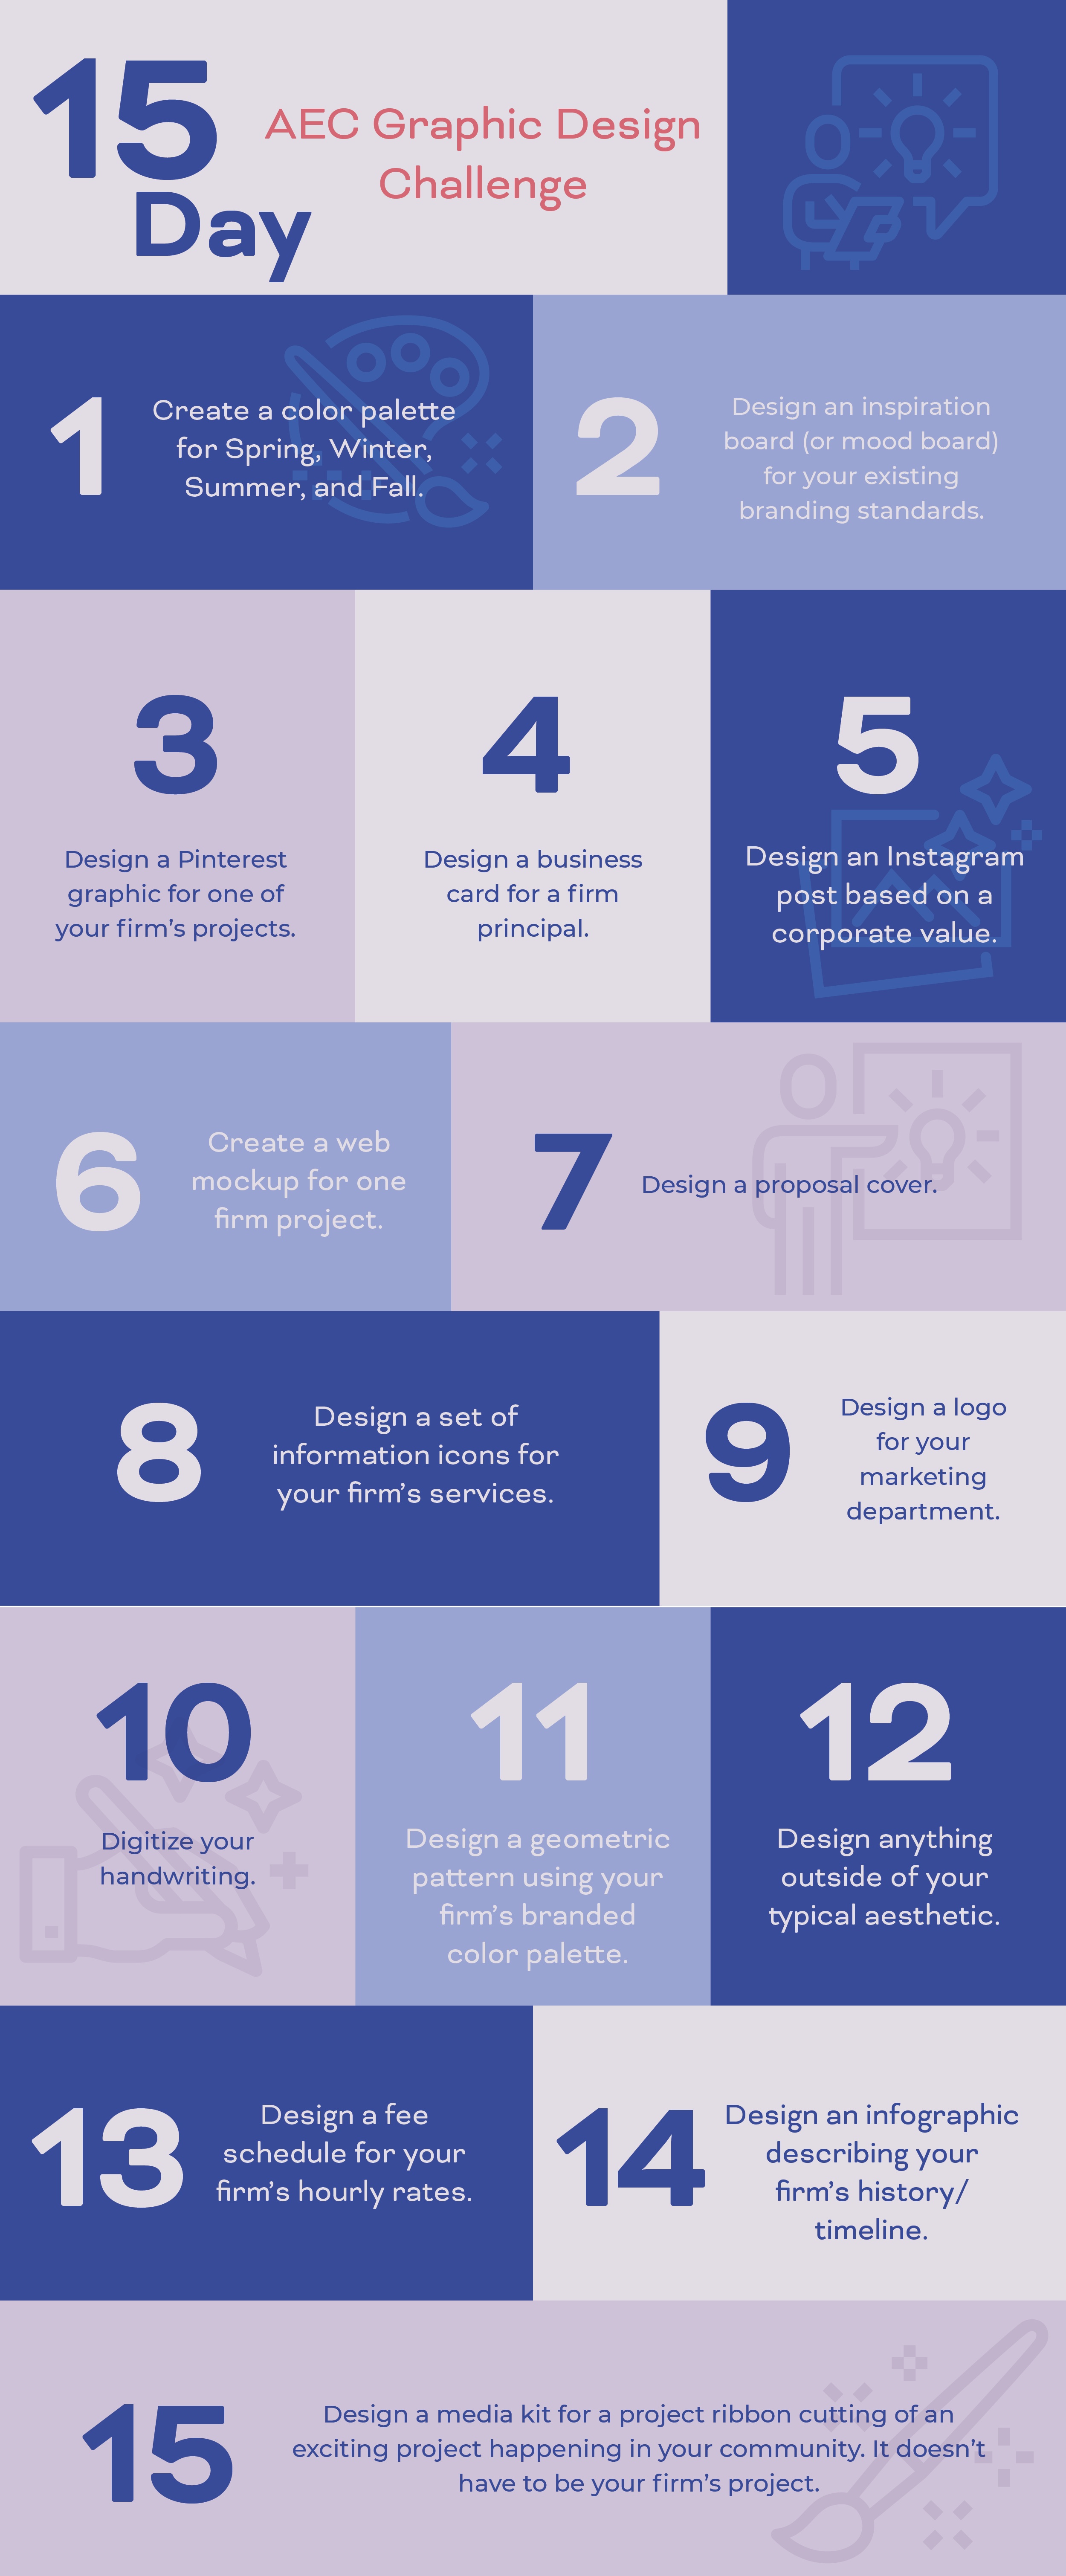 15 day aec graphic design challenge infographic